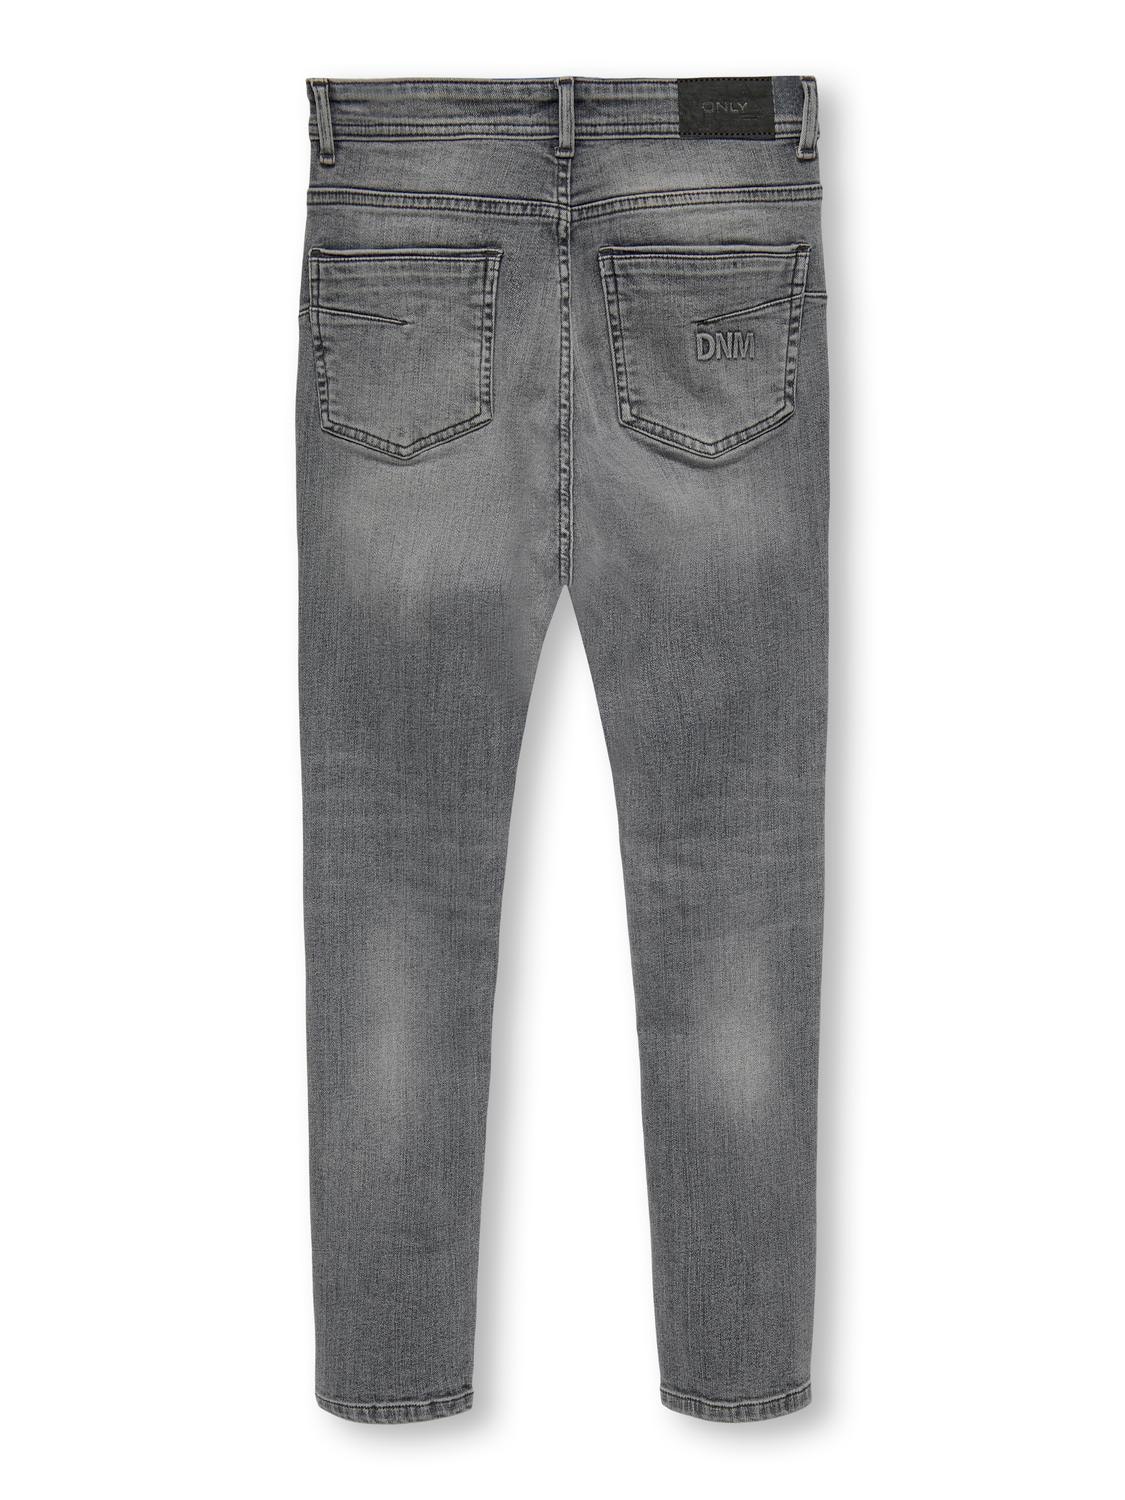 ONLY kobraper venice tapered jeans dnm noos -Grey Denim - 15309838